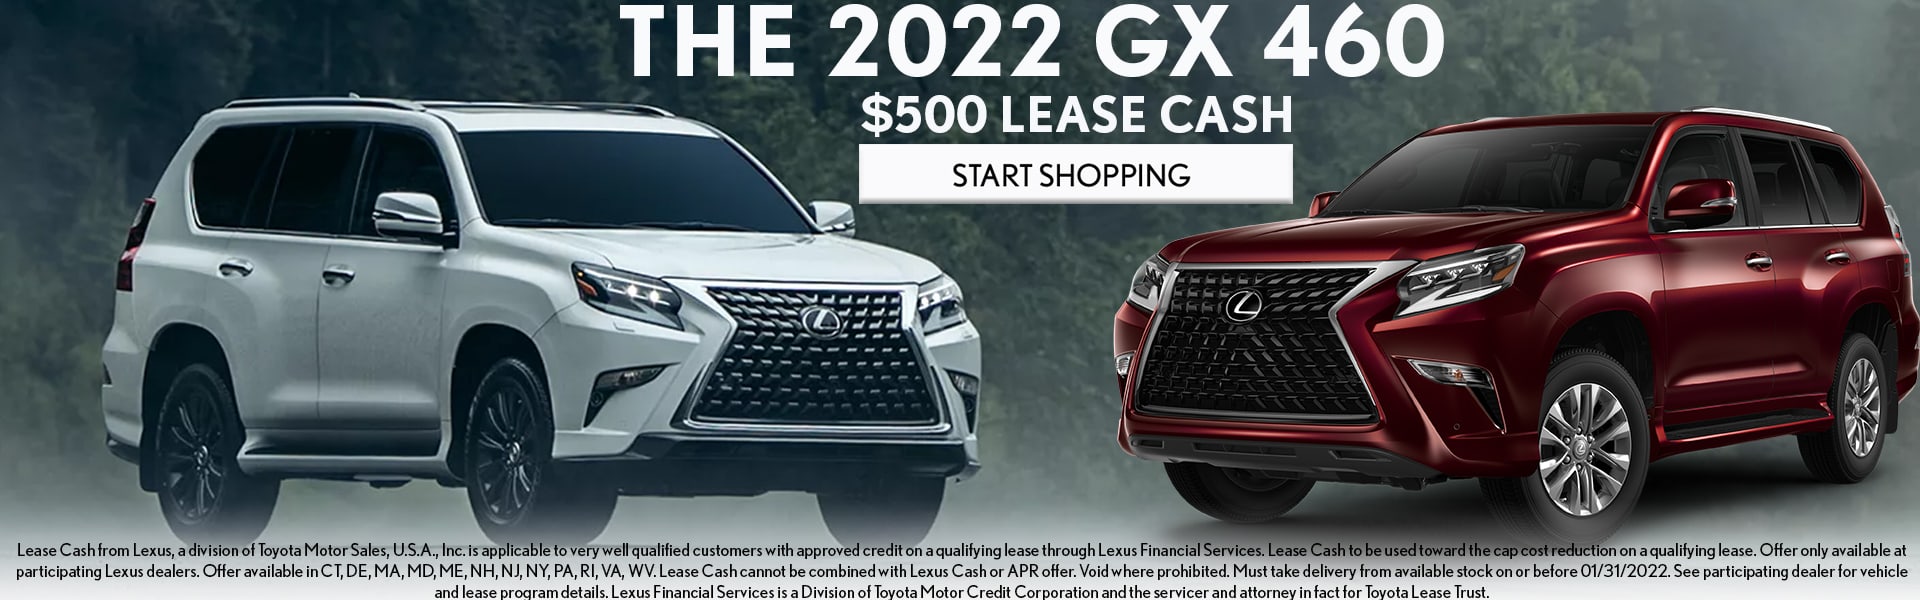 2022 Lexus GX 460 special offer